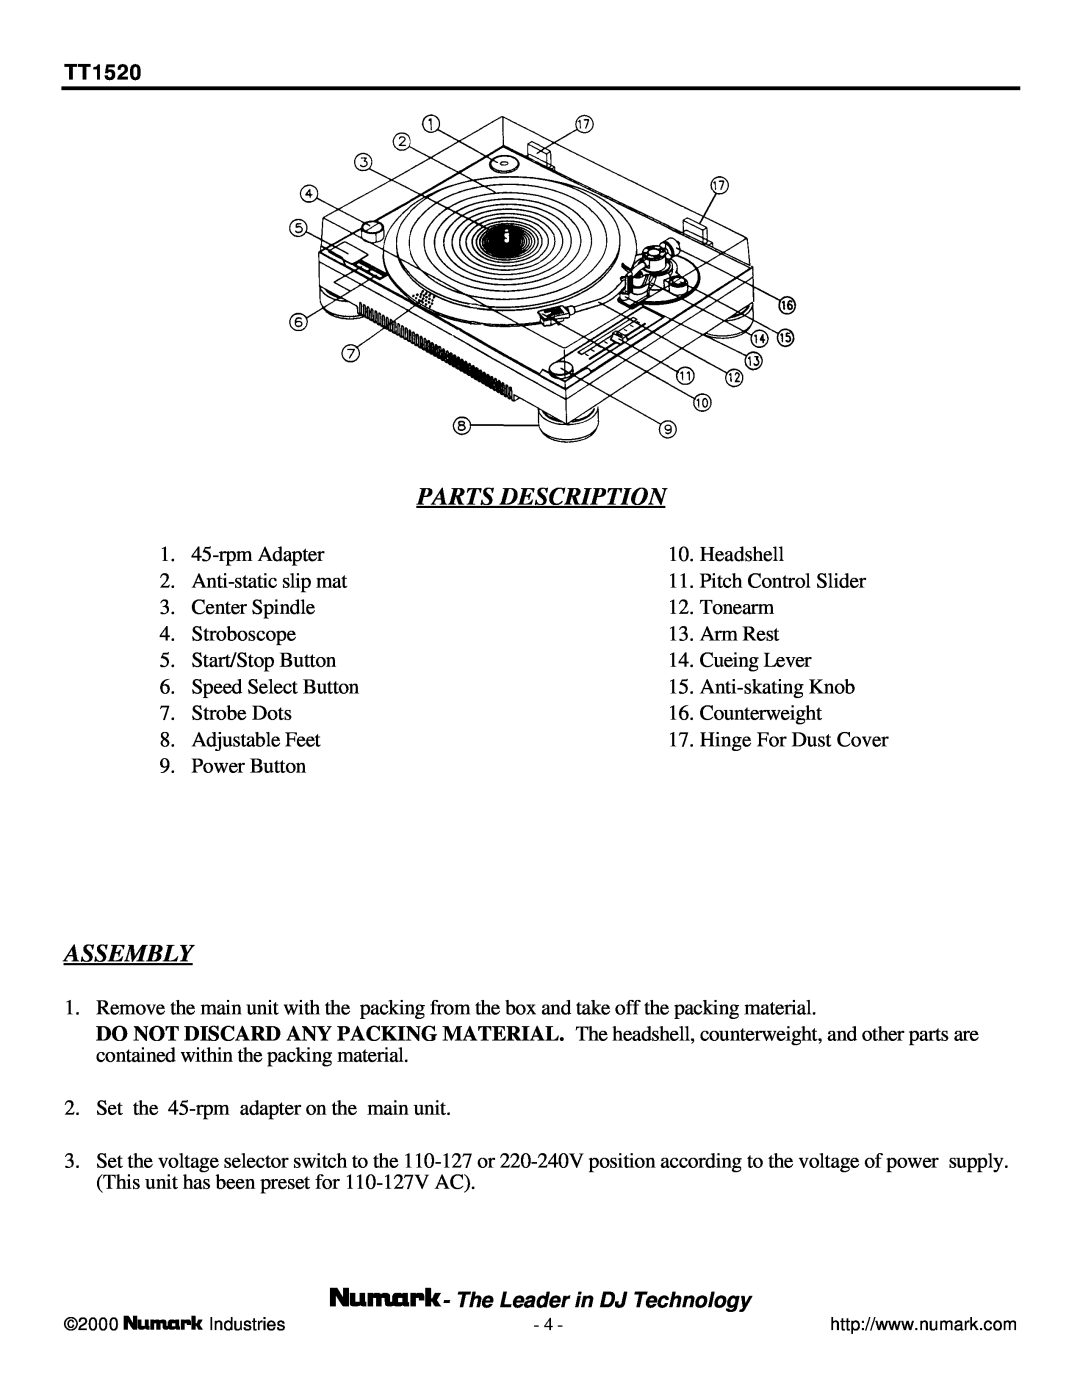 Numark Industries TT-1520 user manual Parts Description, Assembly, TT1520, The Leader in DJ Technology 